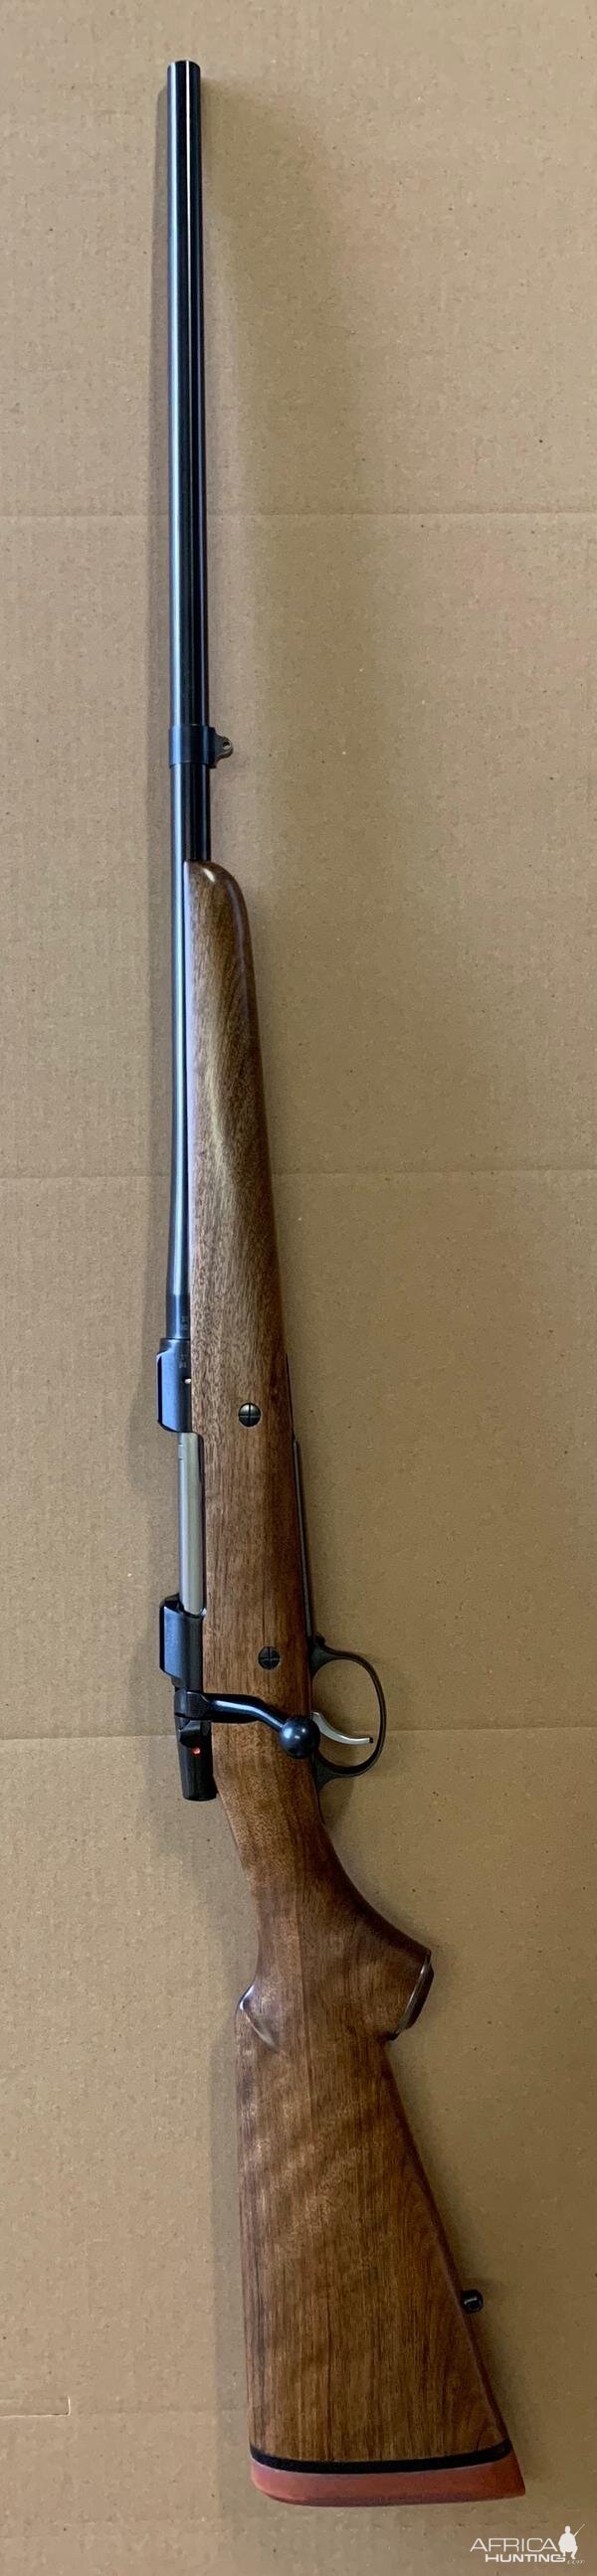 CZ 550 9.3x62 British Style Rifle